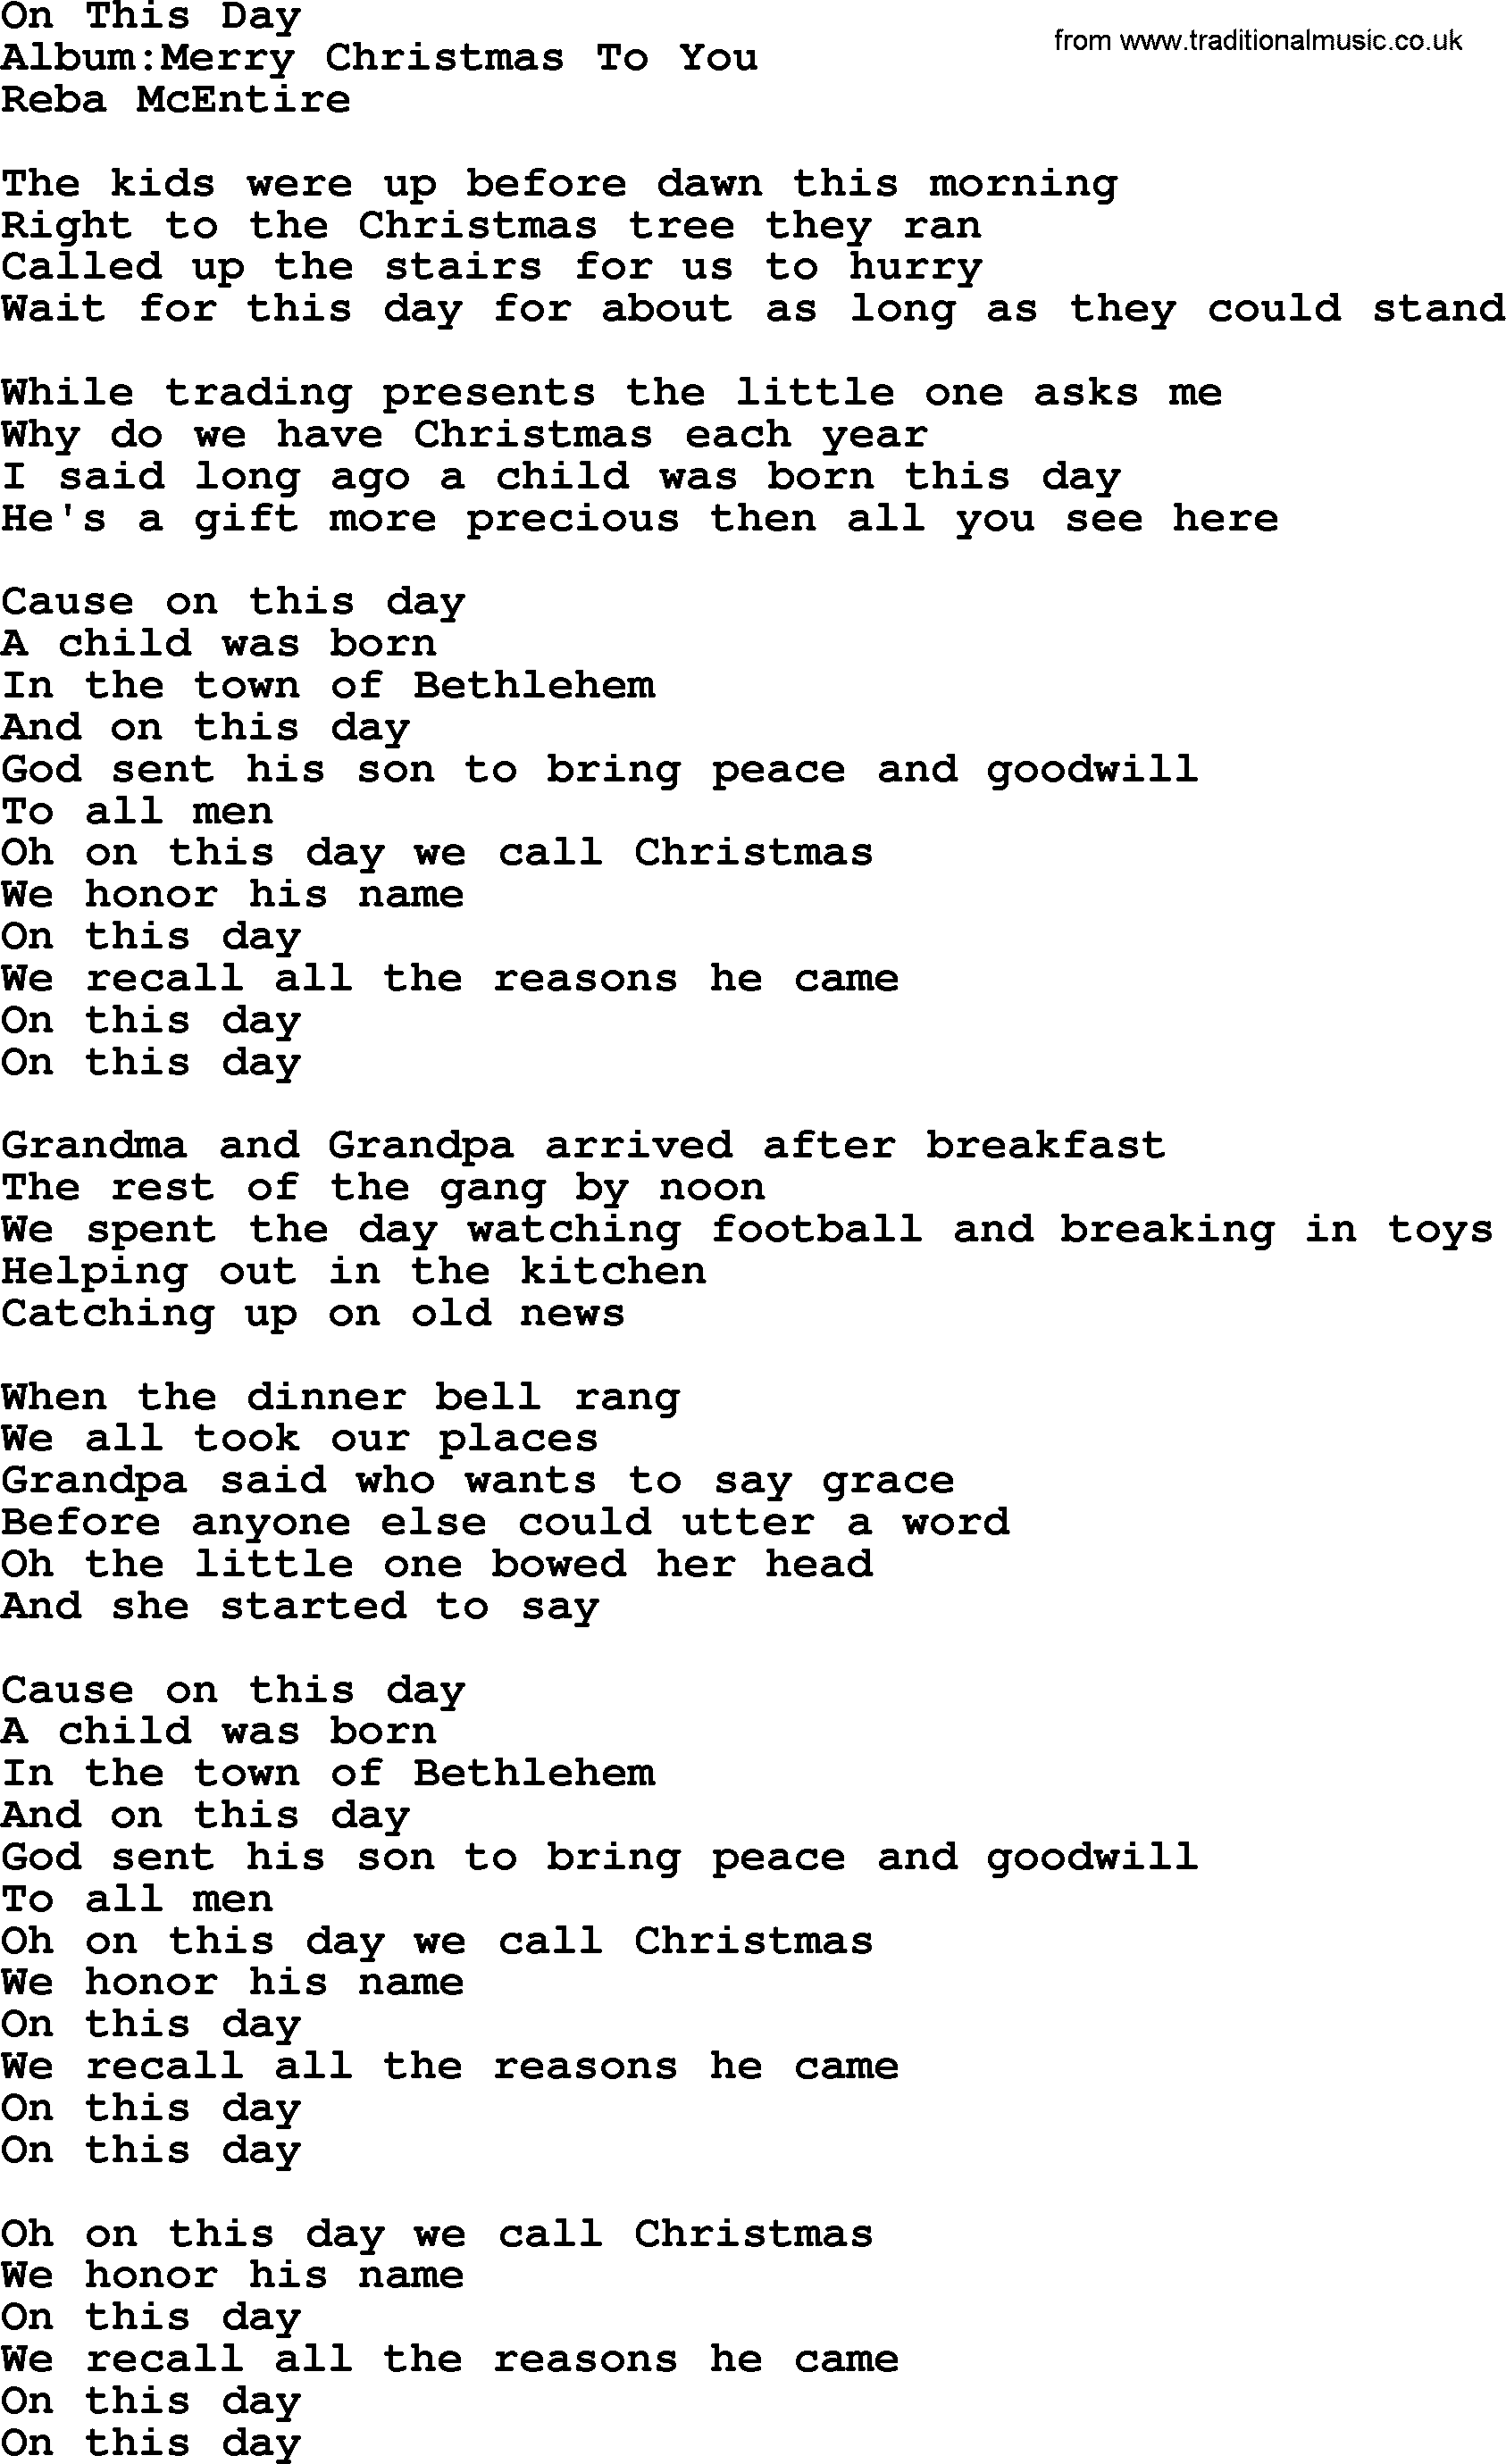 Reba McEntire song: On This Day lyrics